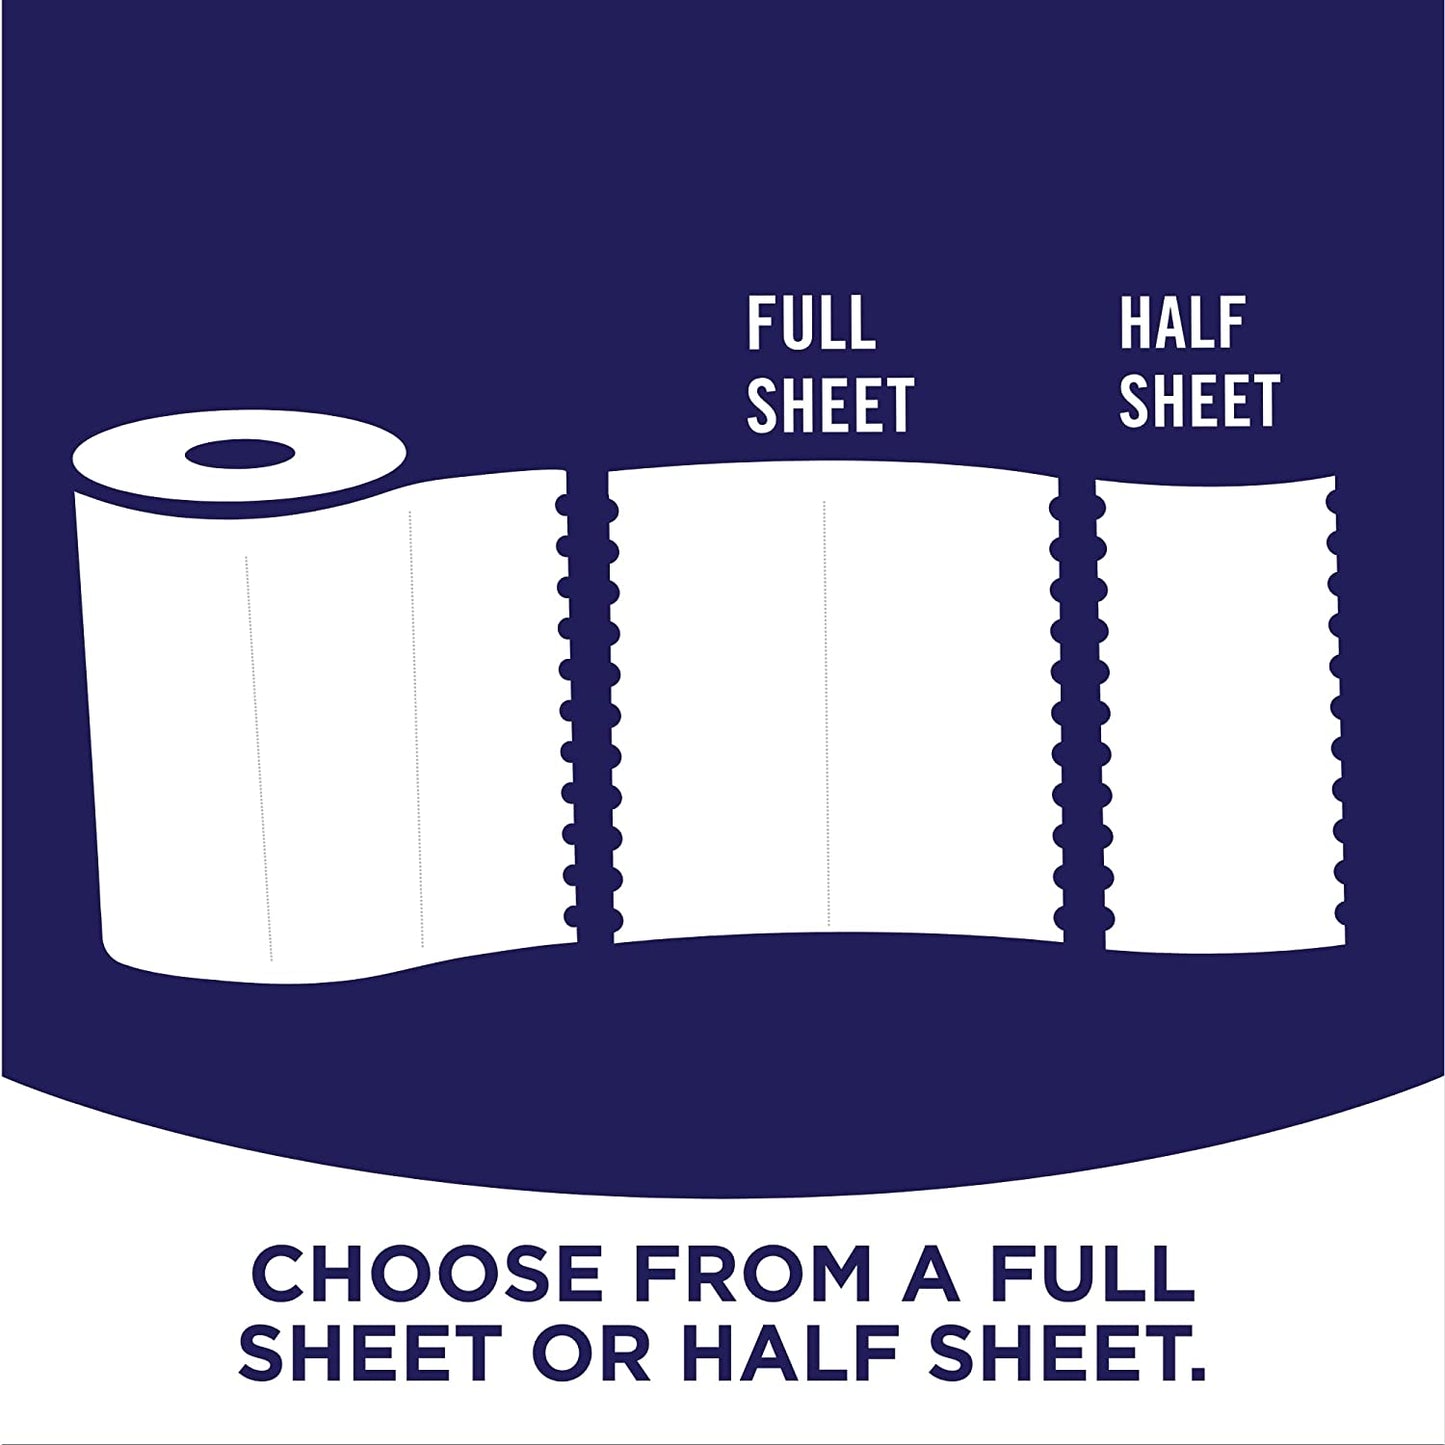 Sparkle® Pick-A-Size® Paper Towels, 24 Double Rolls = 48 Regular Rolls